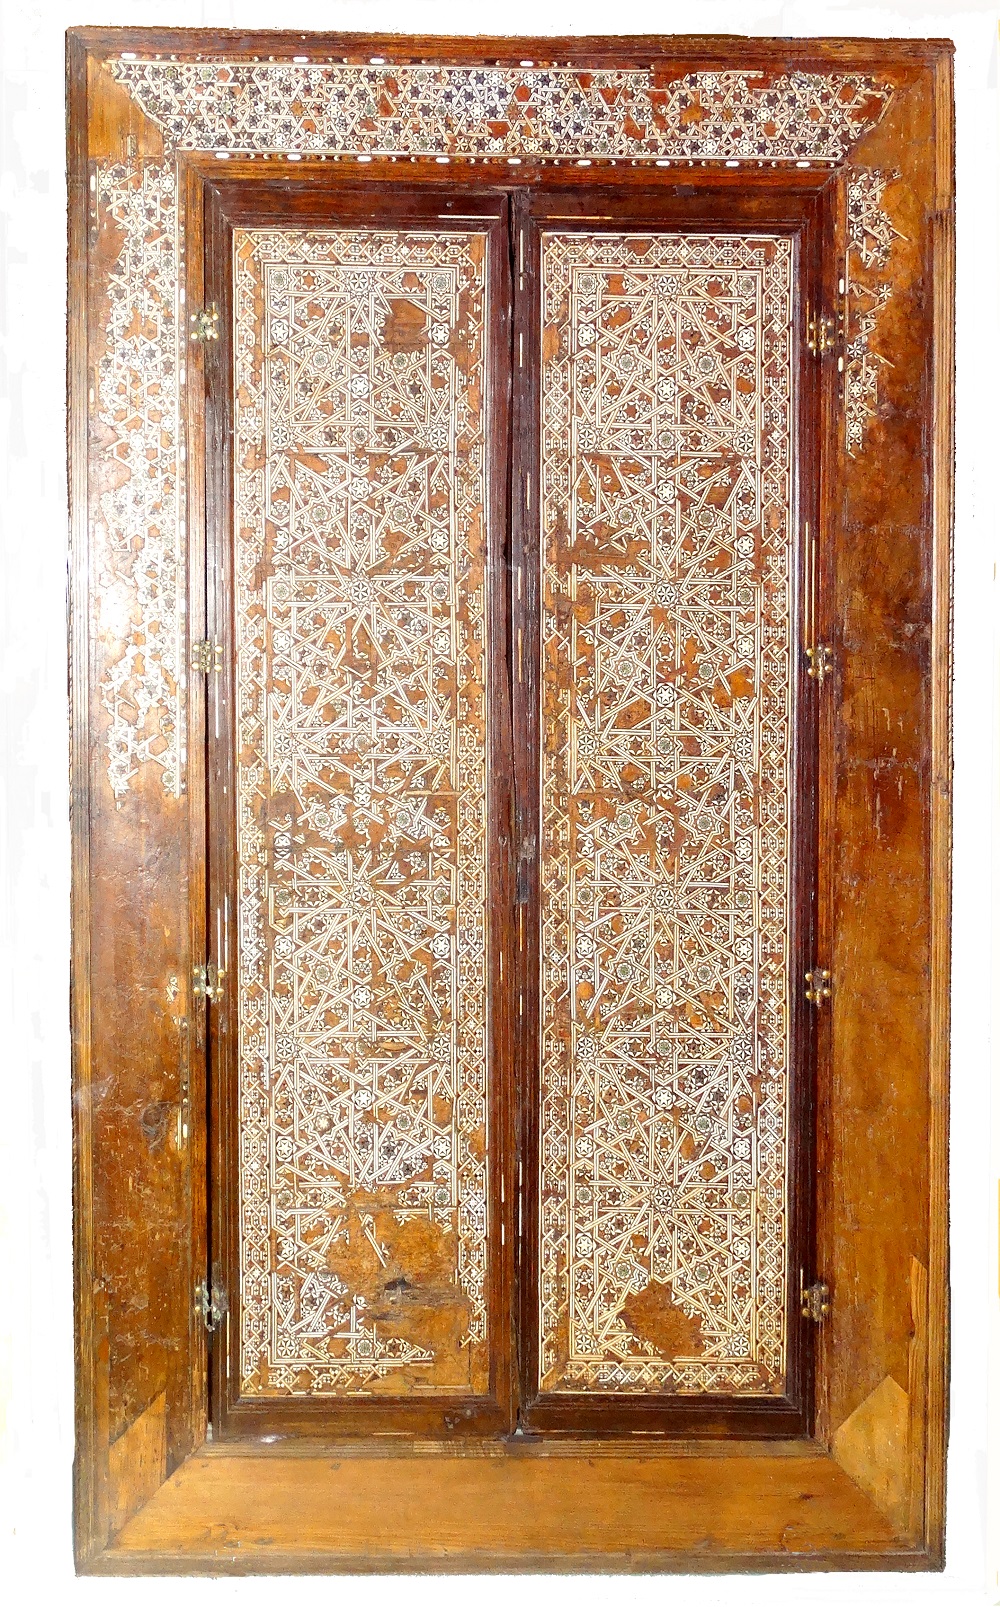 The Hispano-Islamic taracea inlay technique and its tradition